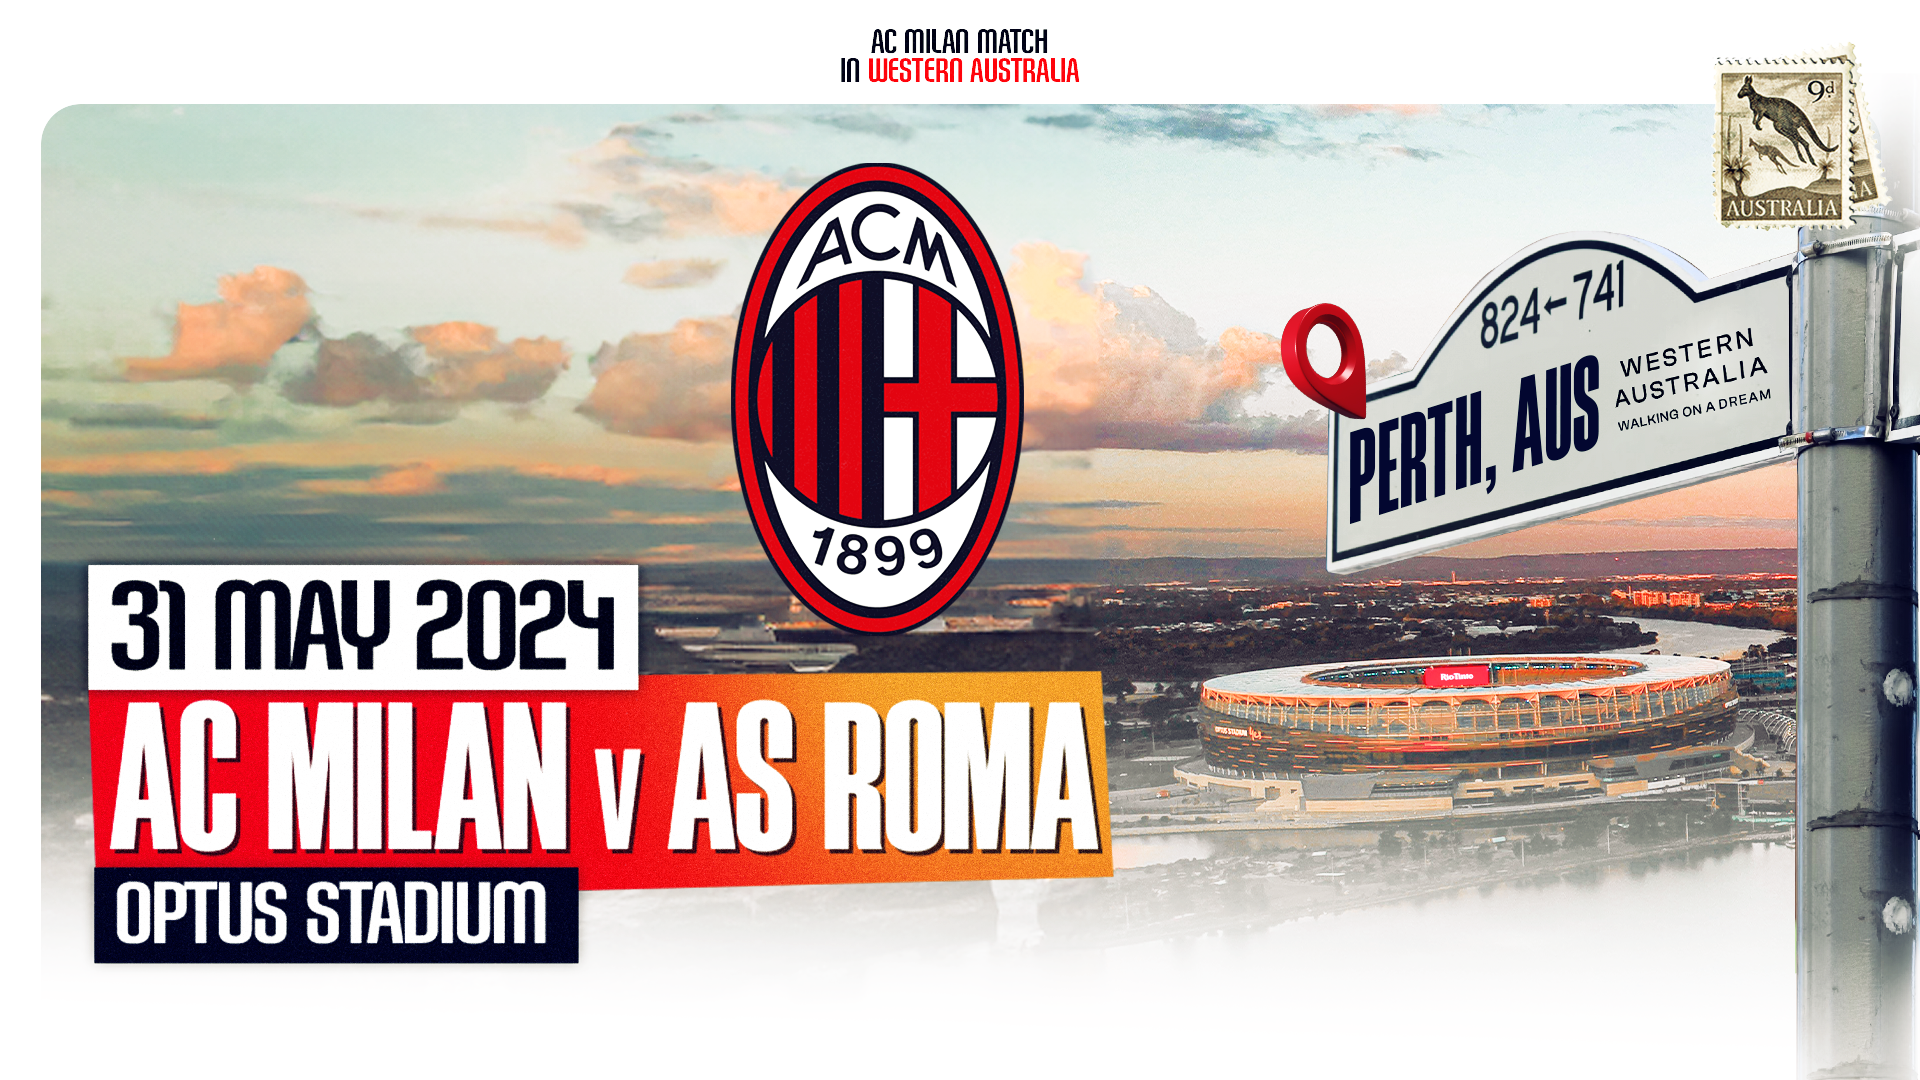 AC Milan vs Roma Perth Australia